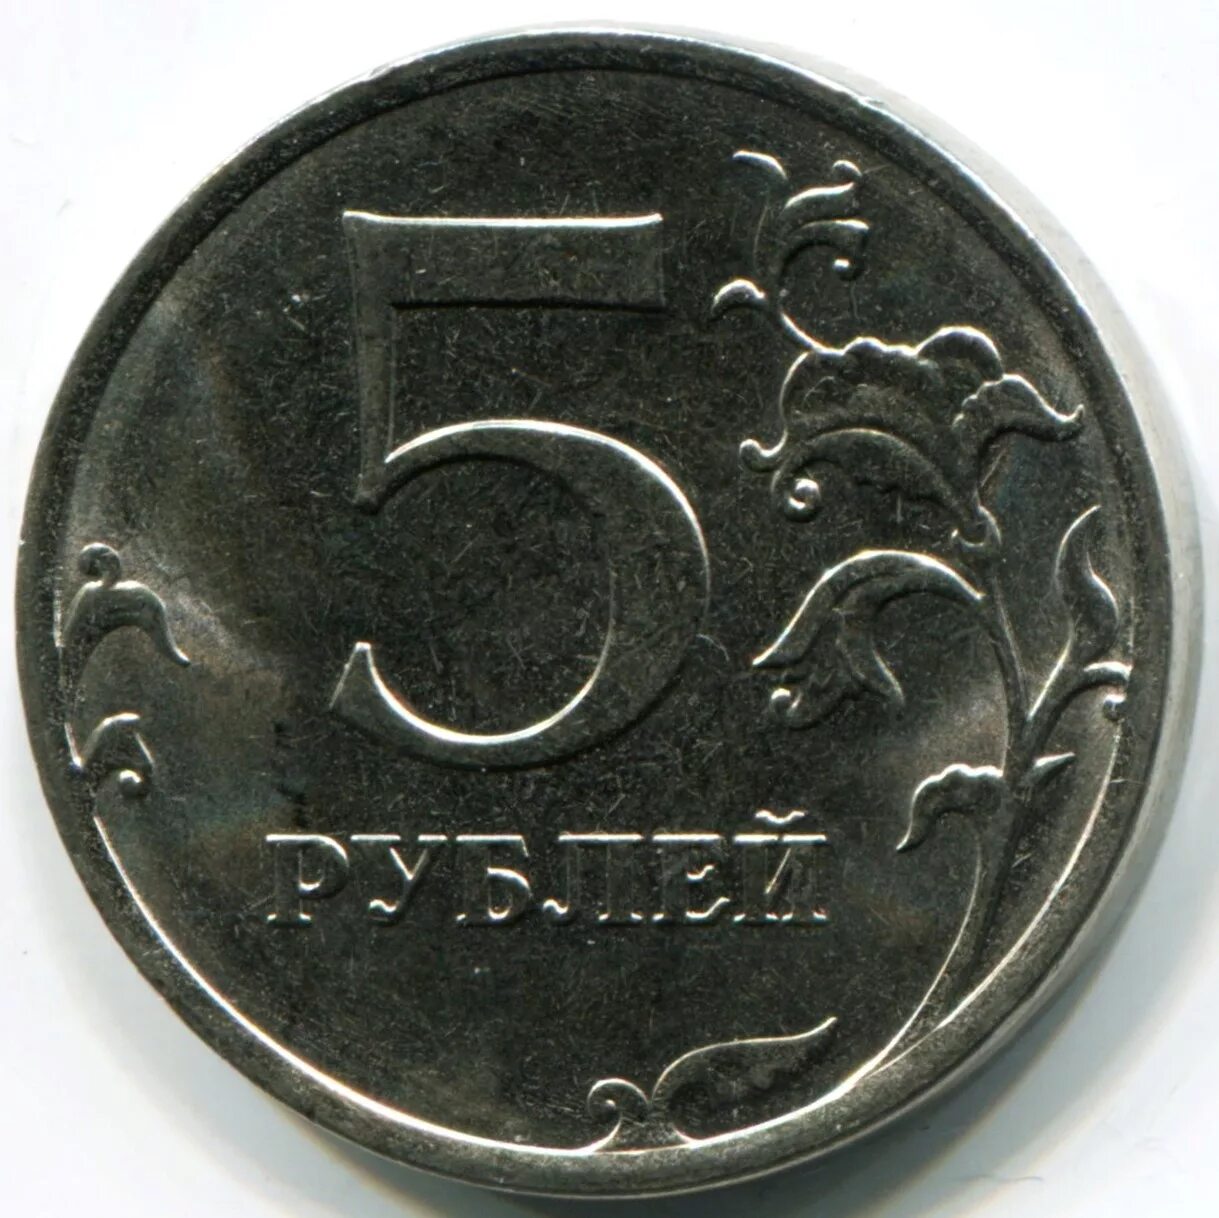 5 Рублей 1997 года СПМД И ММД. Монета 5 рублей. Диаметр 5 рублевой монеты. Пять рублей. 37 5 рублей